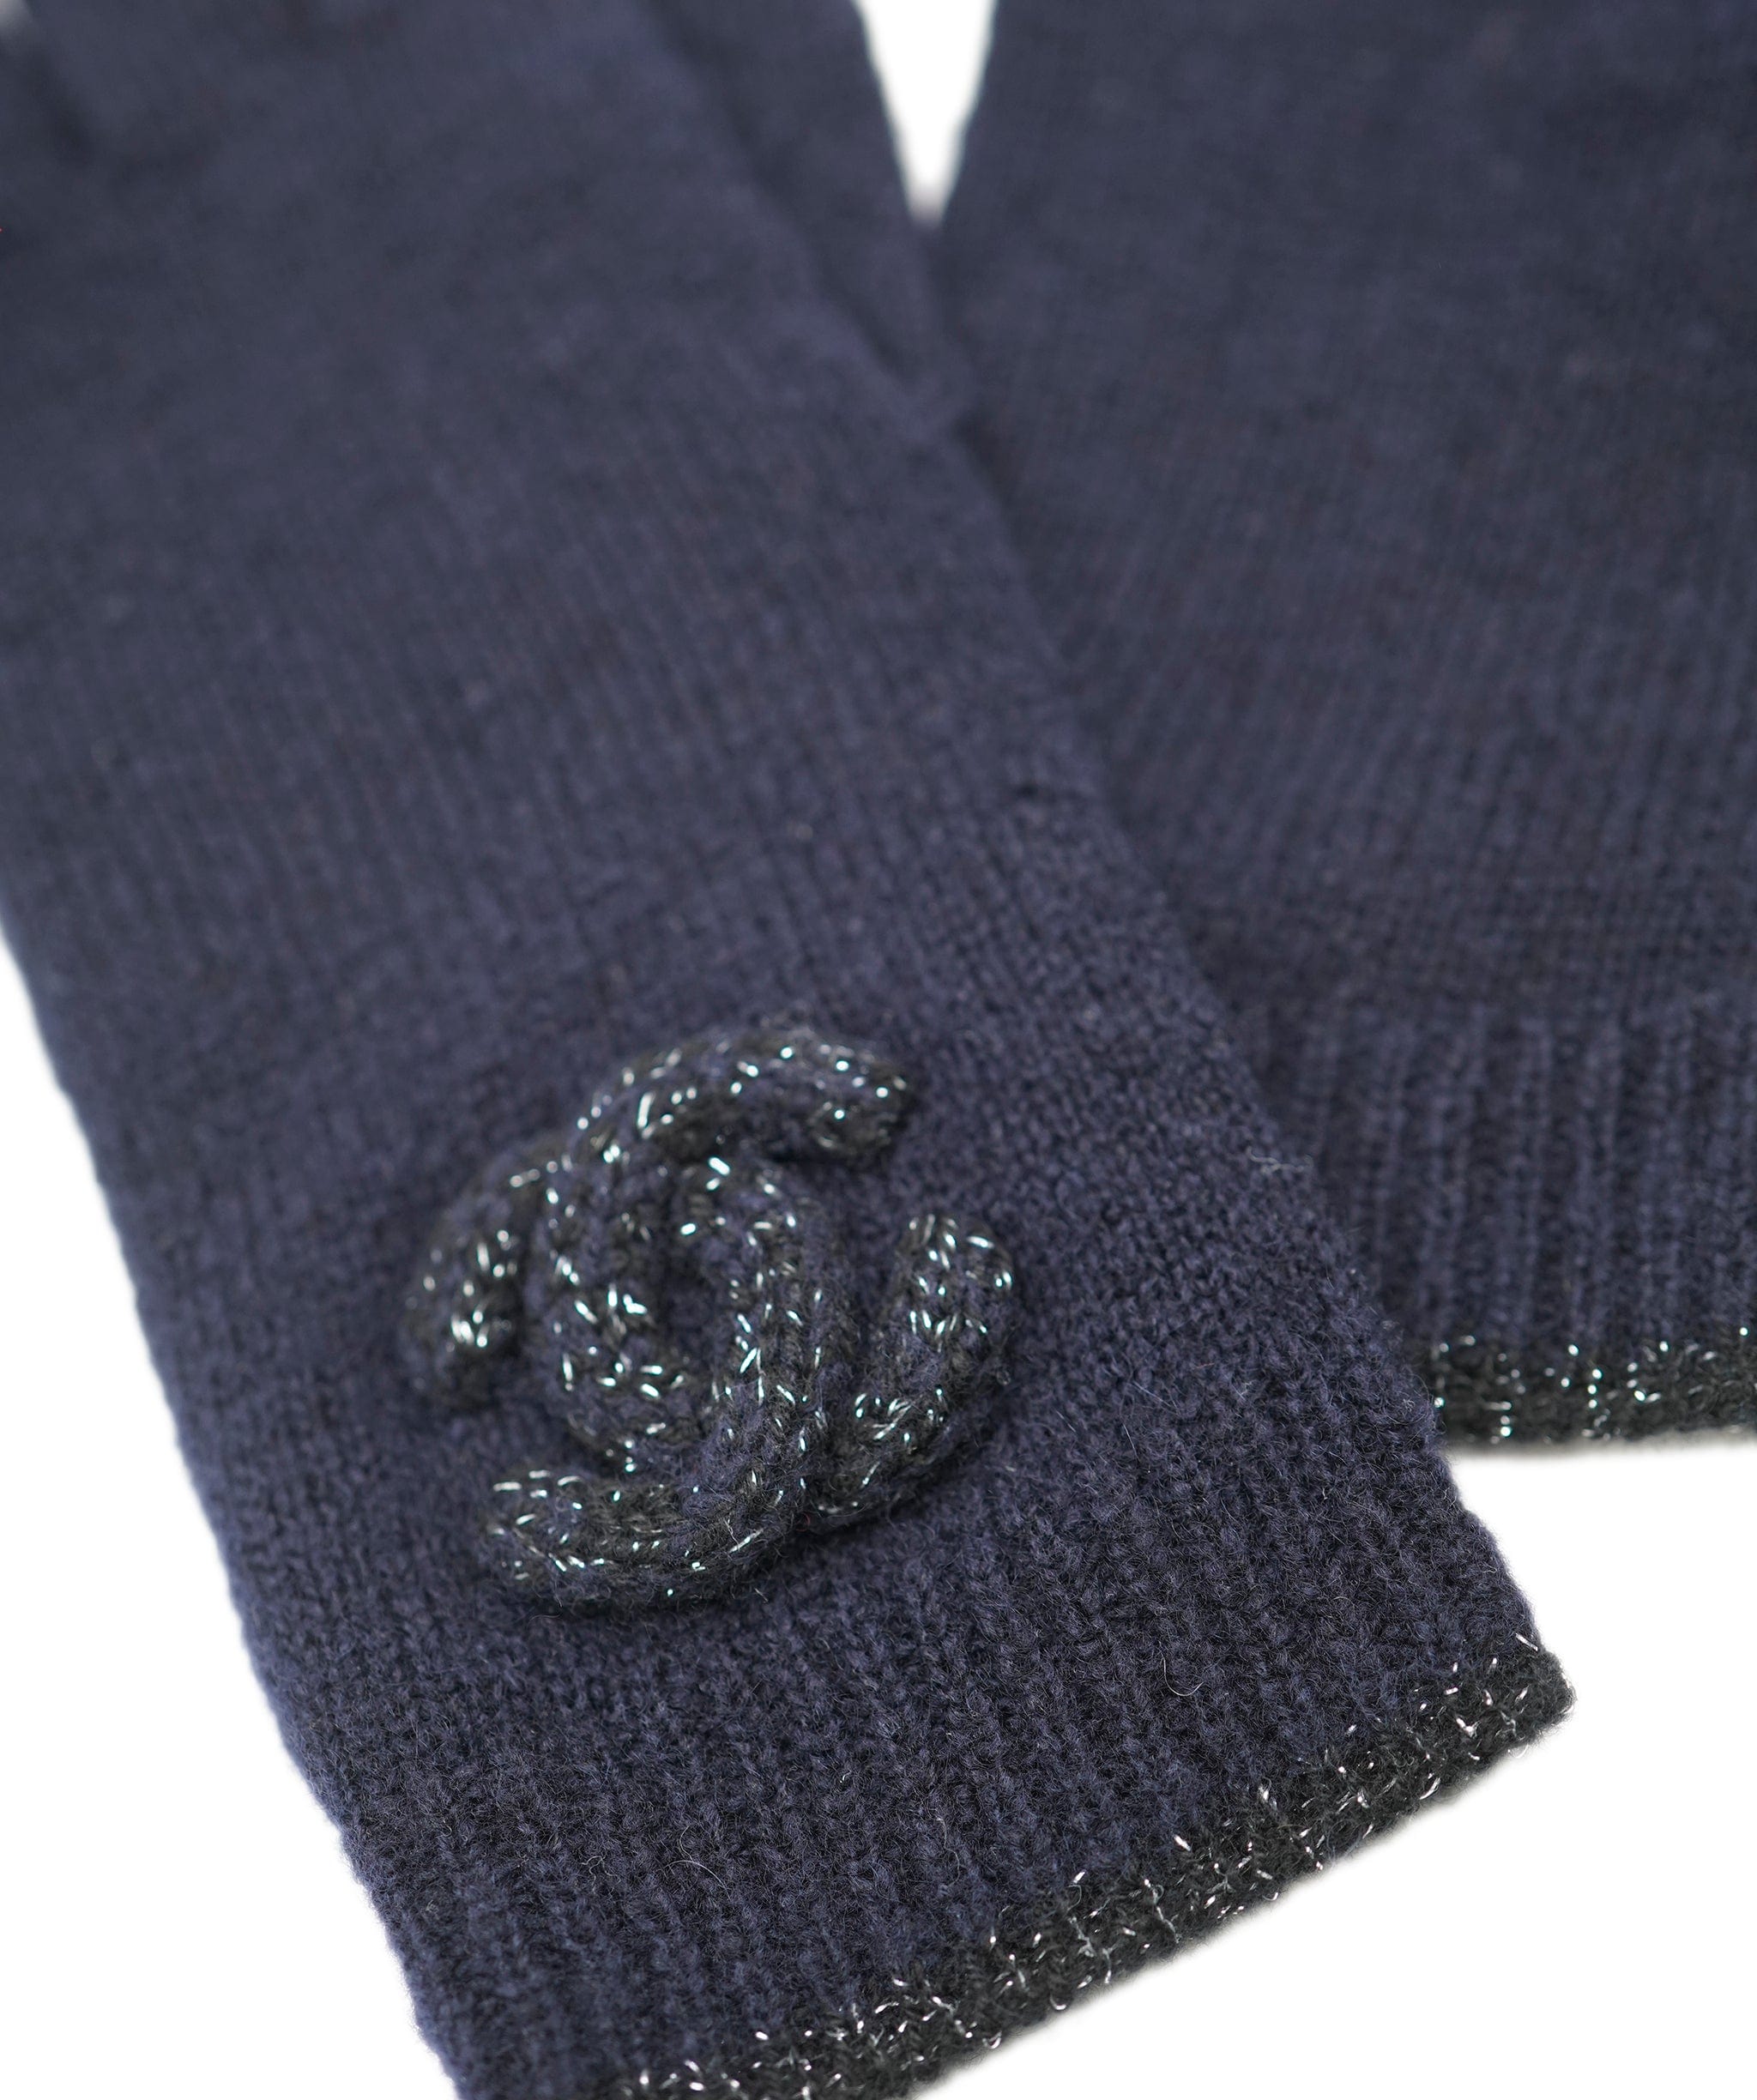 Chanel Chanel Knit Gloves Navy ASL10178